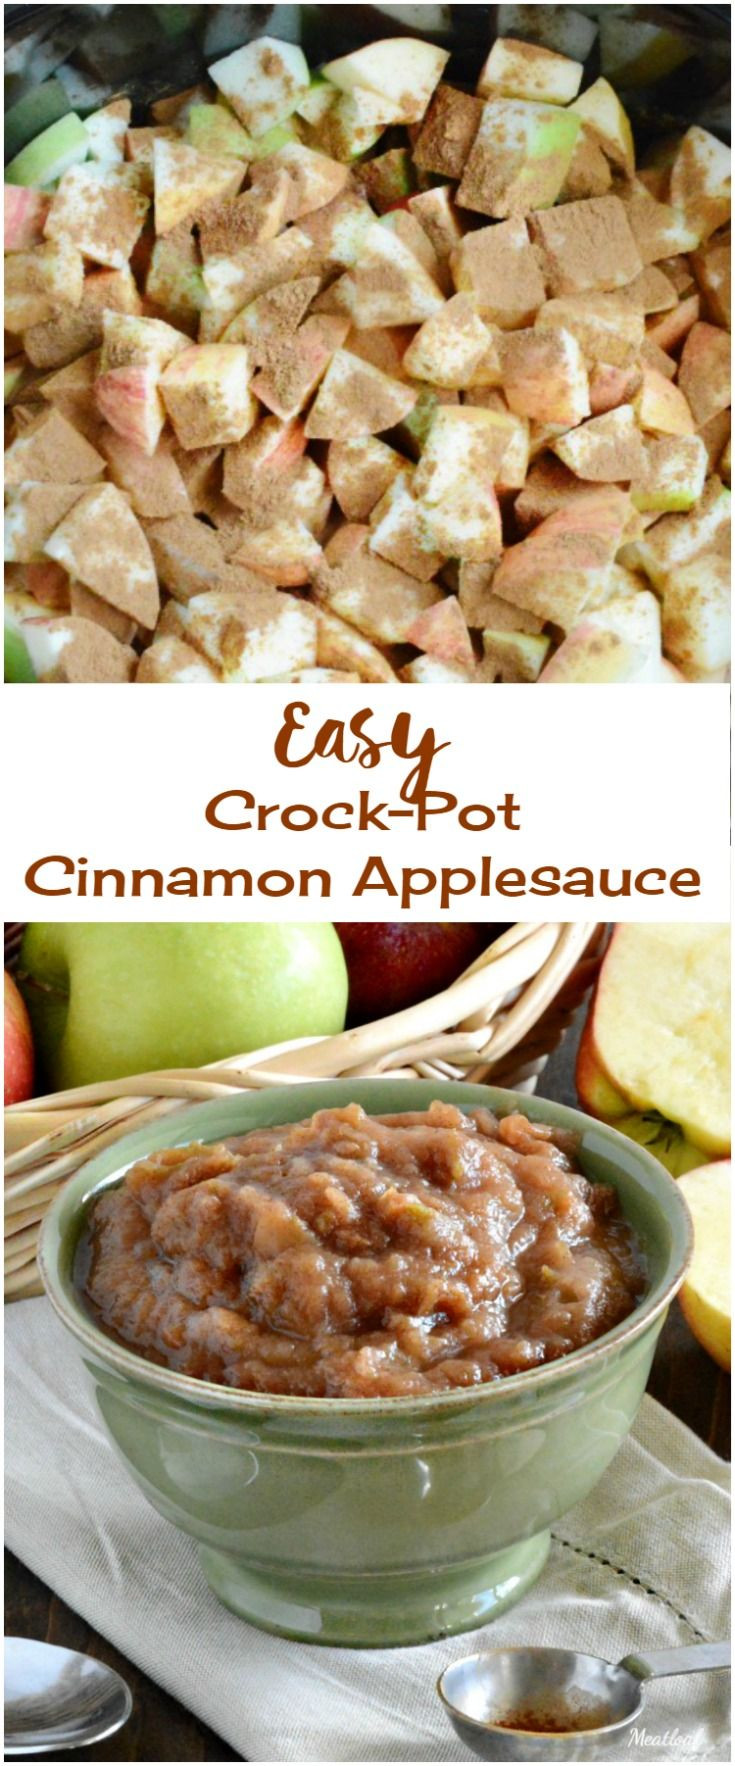 Applesauce Recipes Crockpot
 Homemade Crock Pot Cinnamon Applesauce Recipe